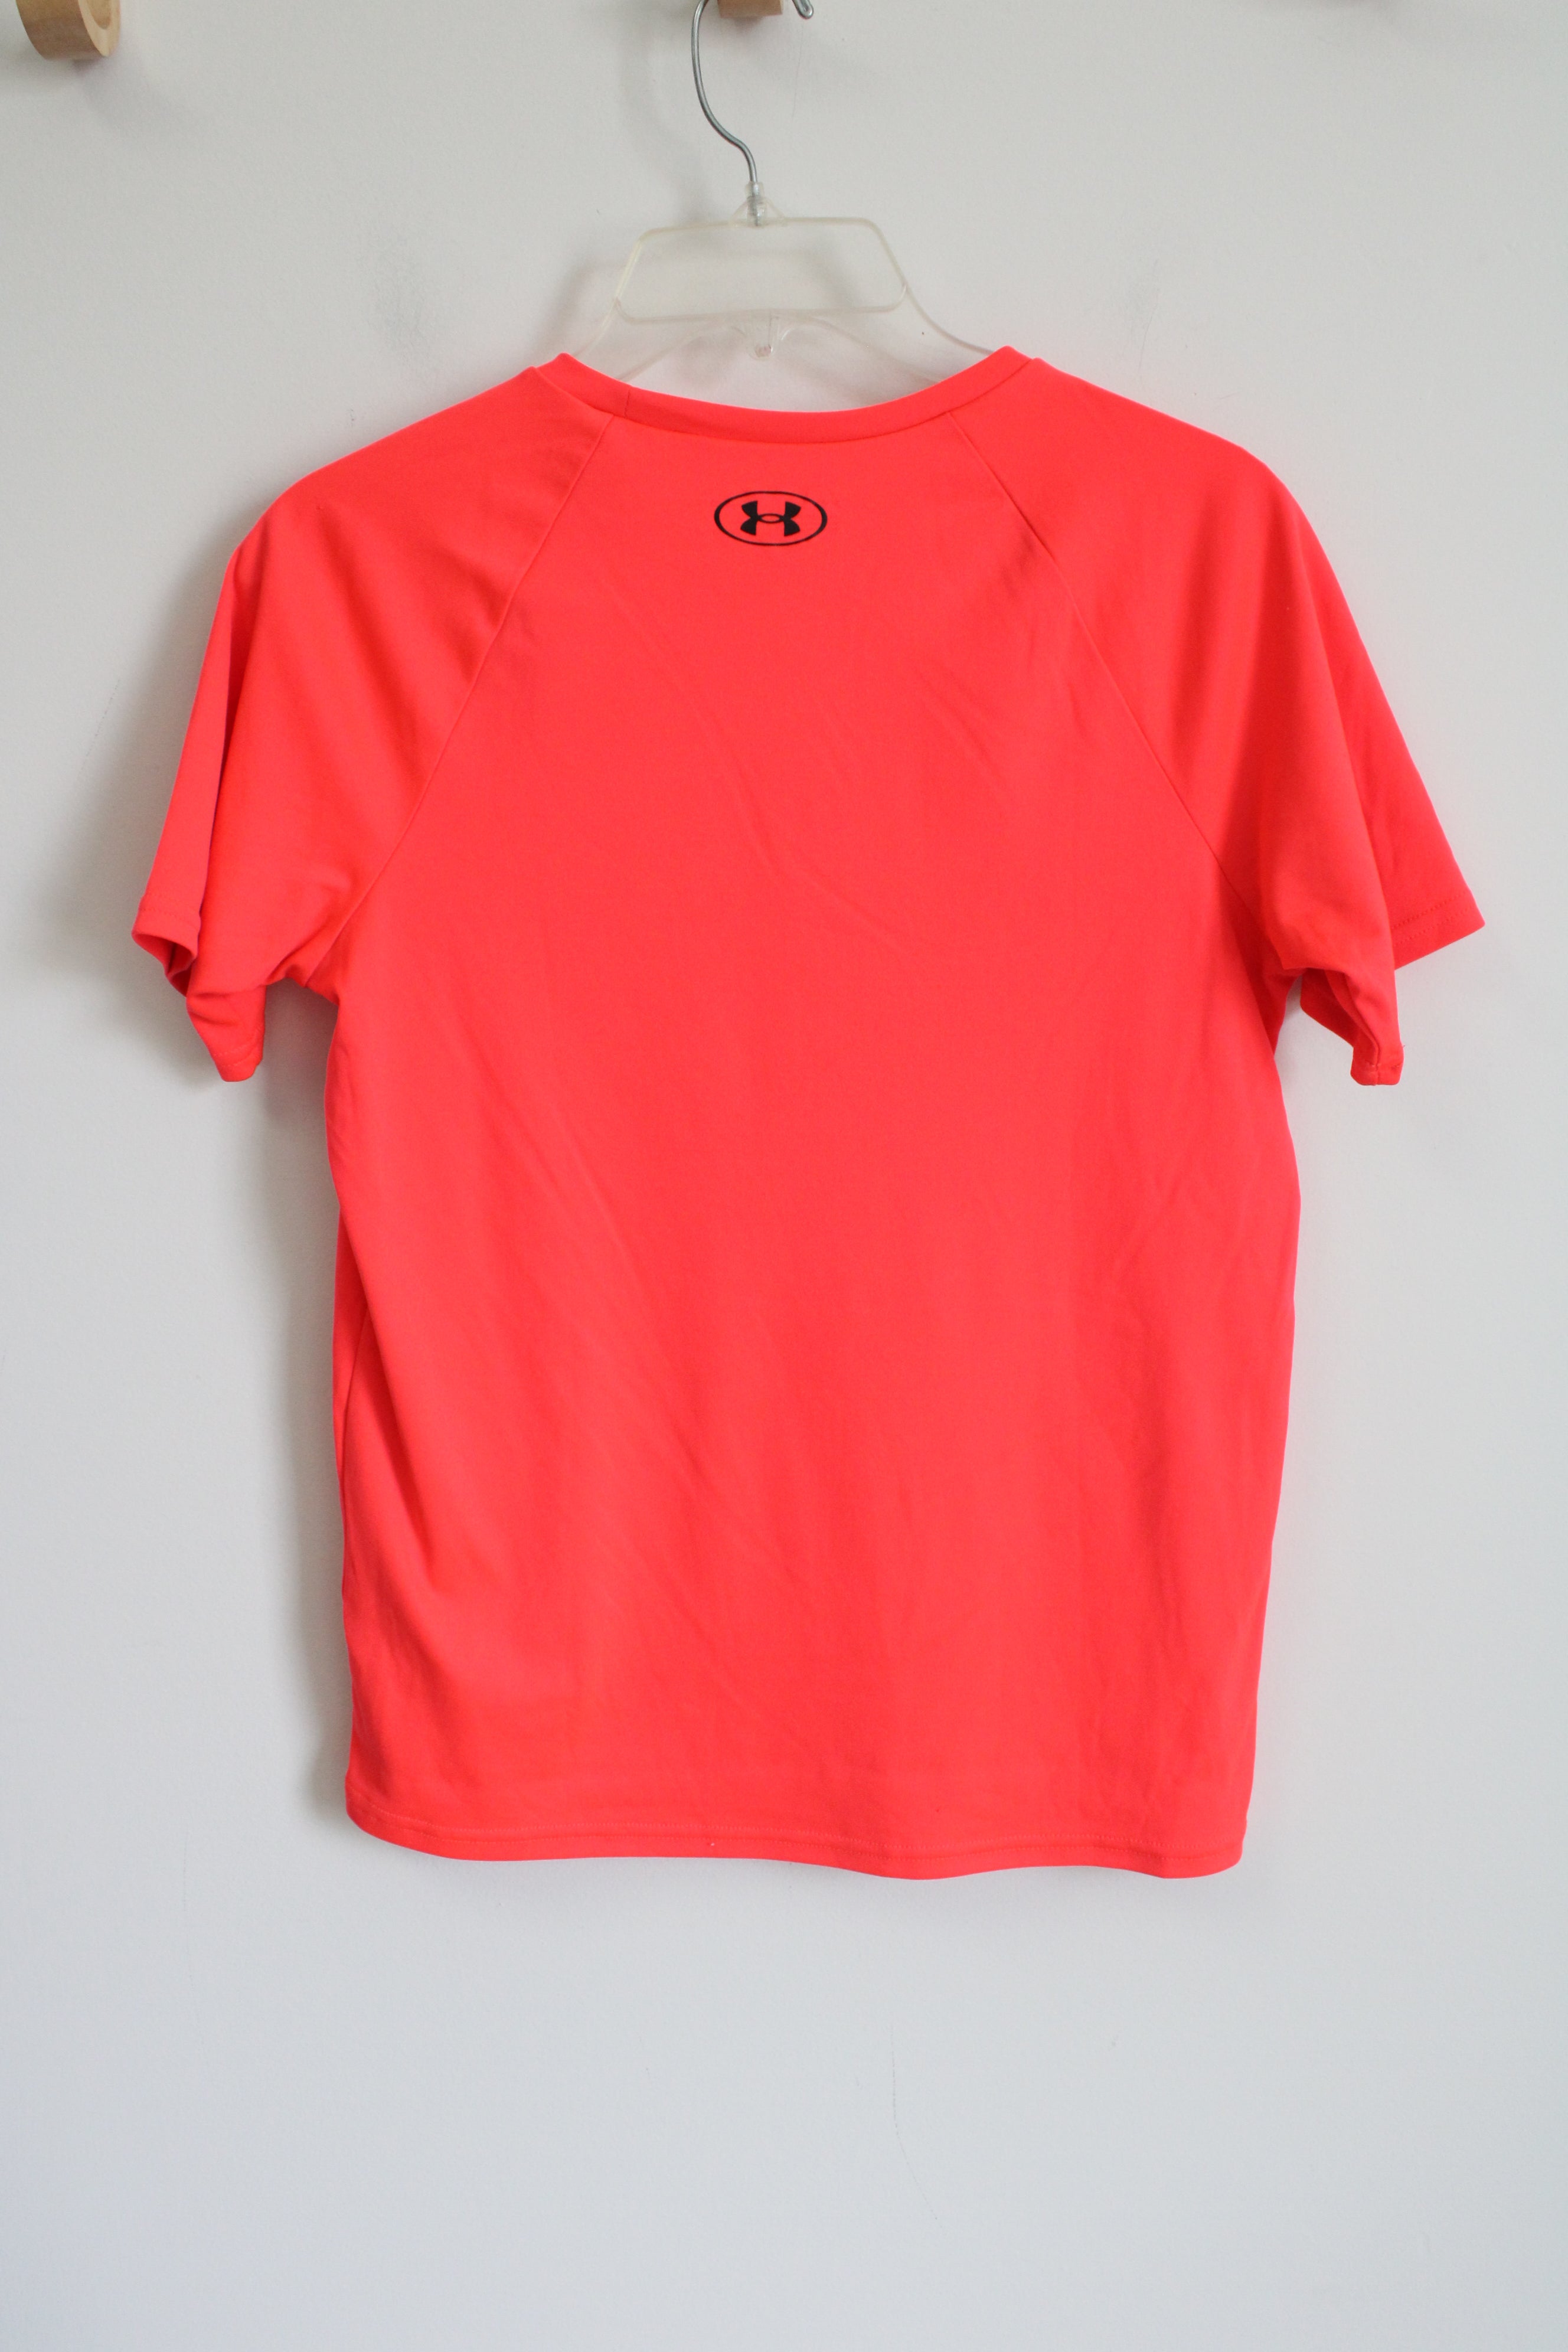 Under Armour Orange Logo Shirt | Youth L (14/16)